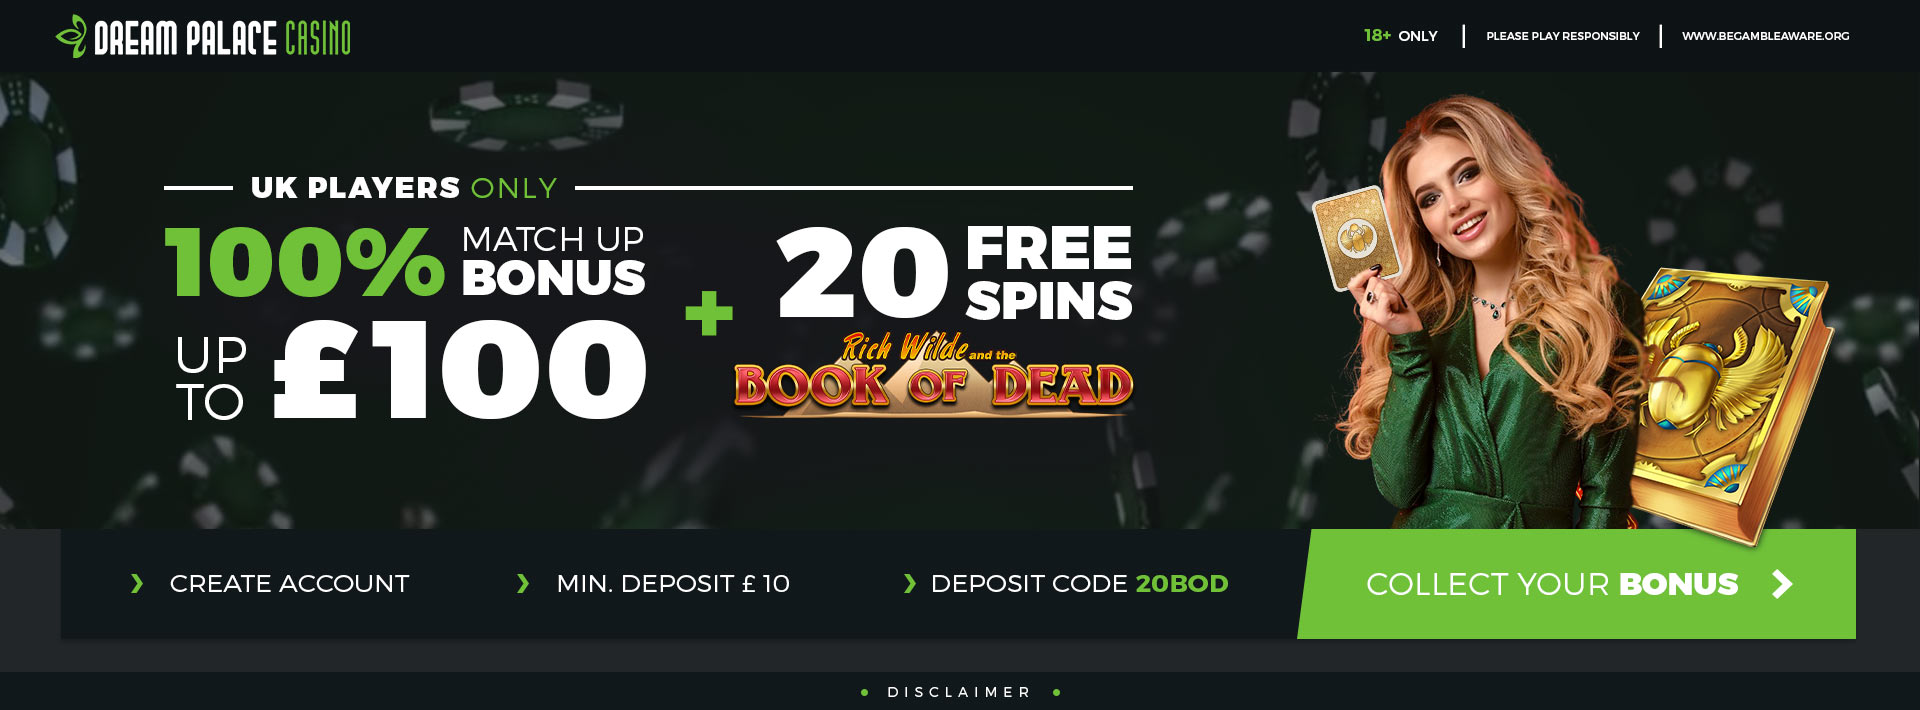 £100 Bonus + 20 Free Spins | Dream Palace Casino